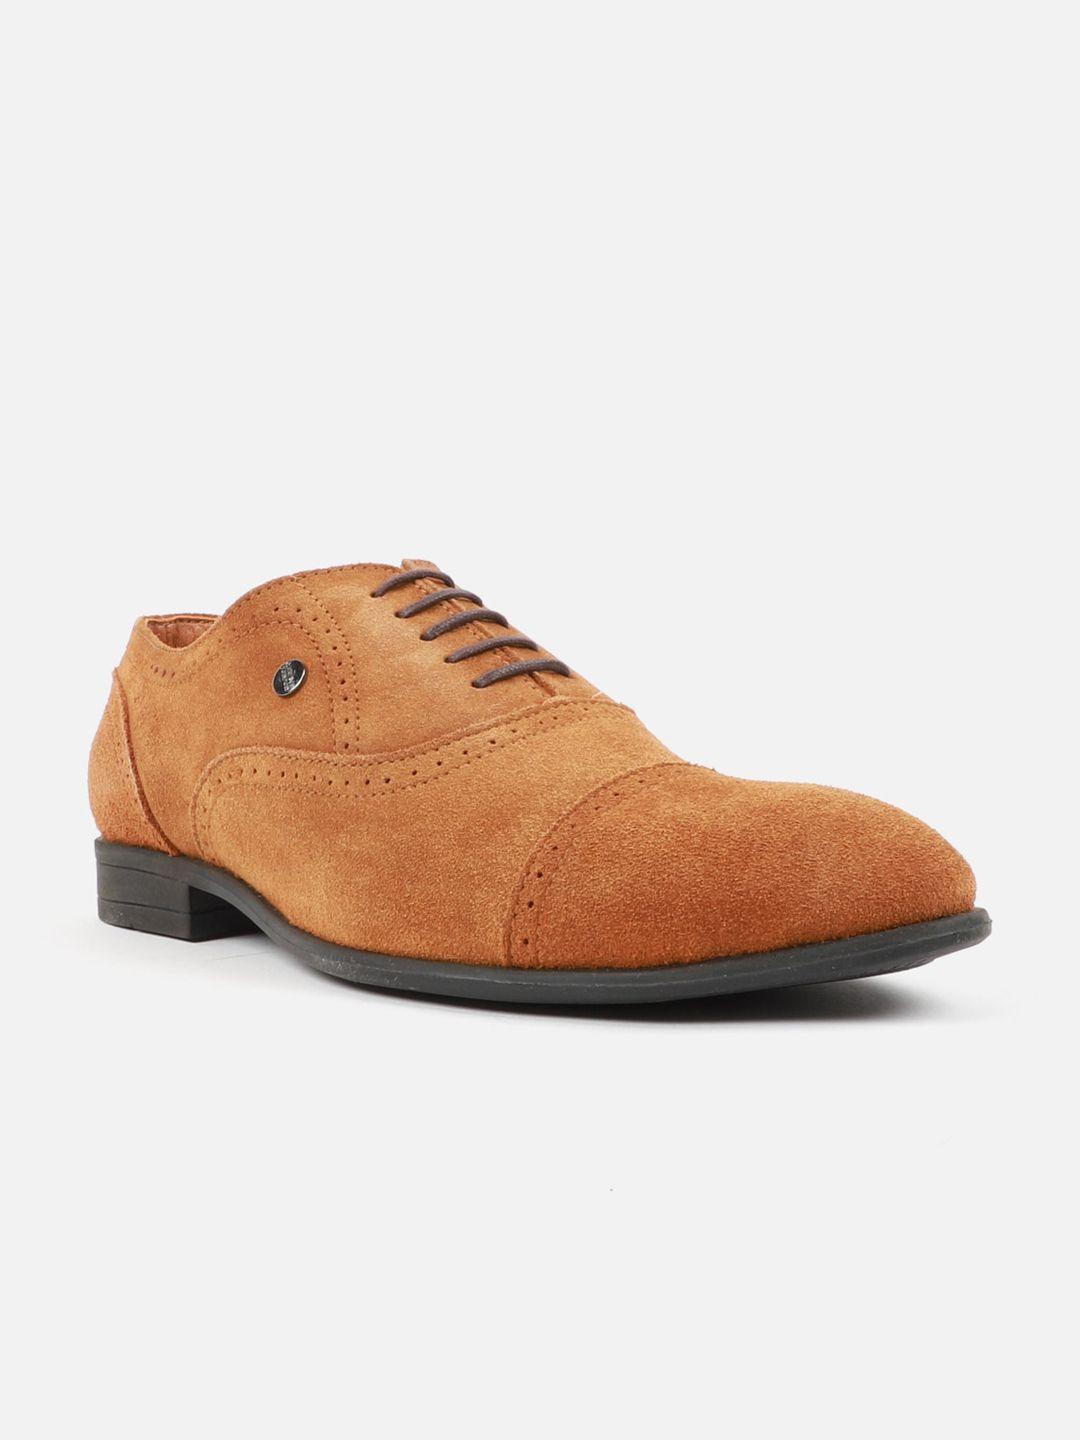 carlton london men oxfords casual shoes